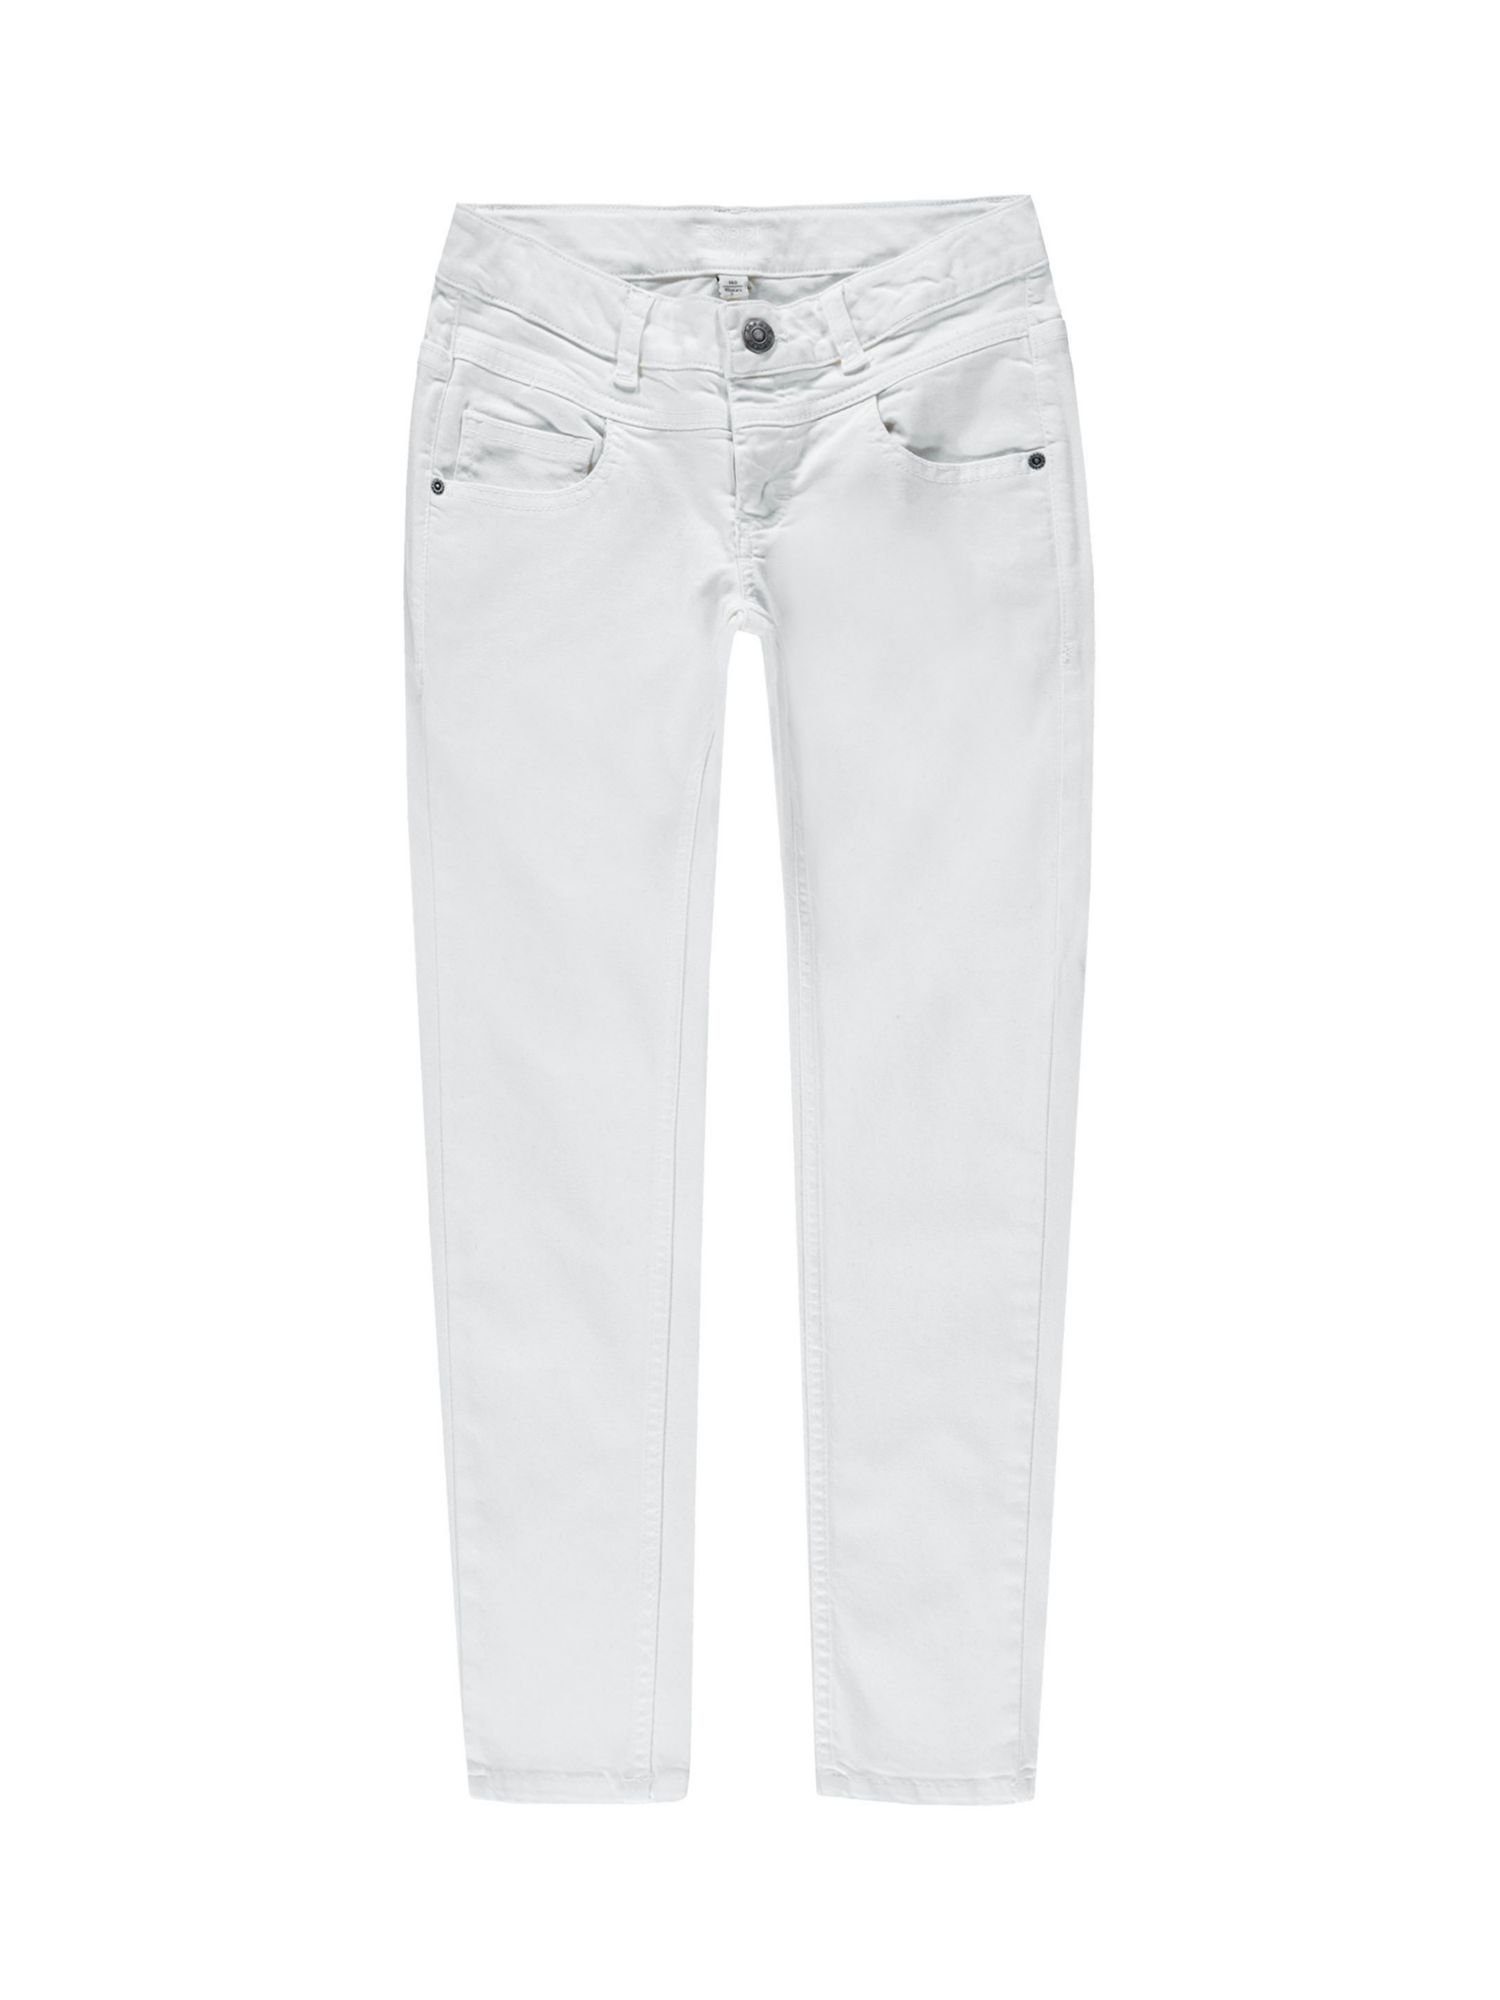 Esprit Pants denim WHITE Stretch-Jeans